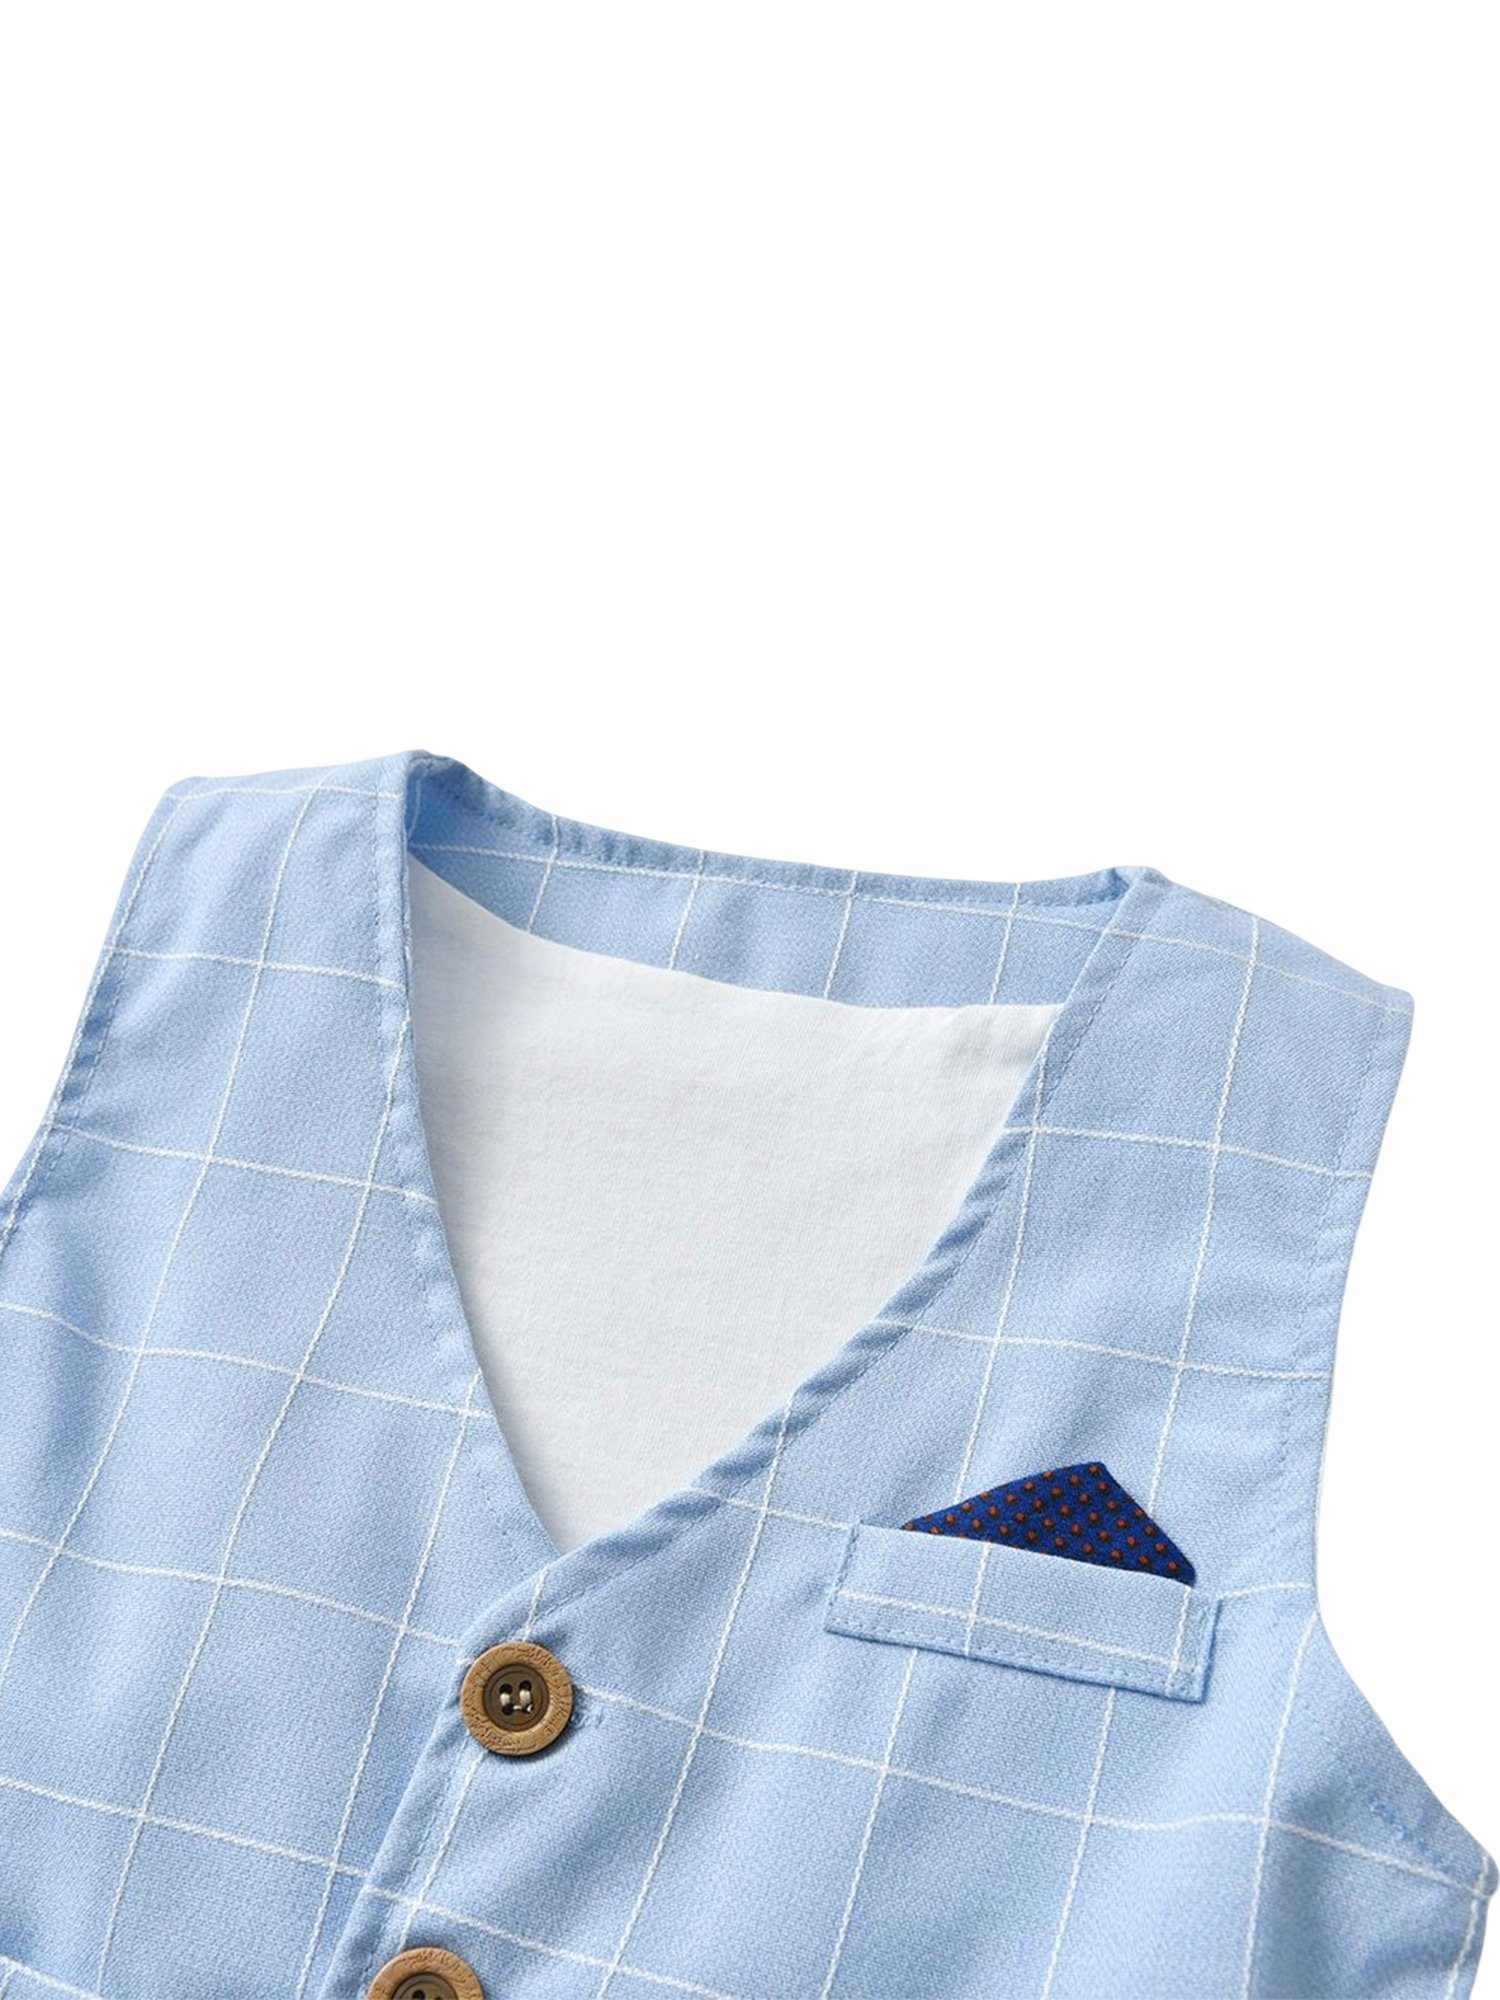 Langarm-Shirt, Jungen Baby Hose, dreiteiliges Blau Lapastyle Weste, Set Anzug